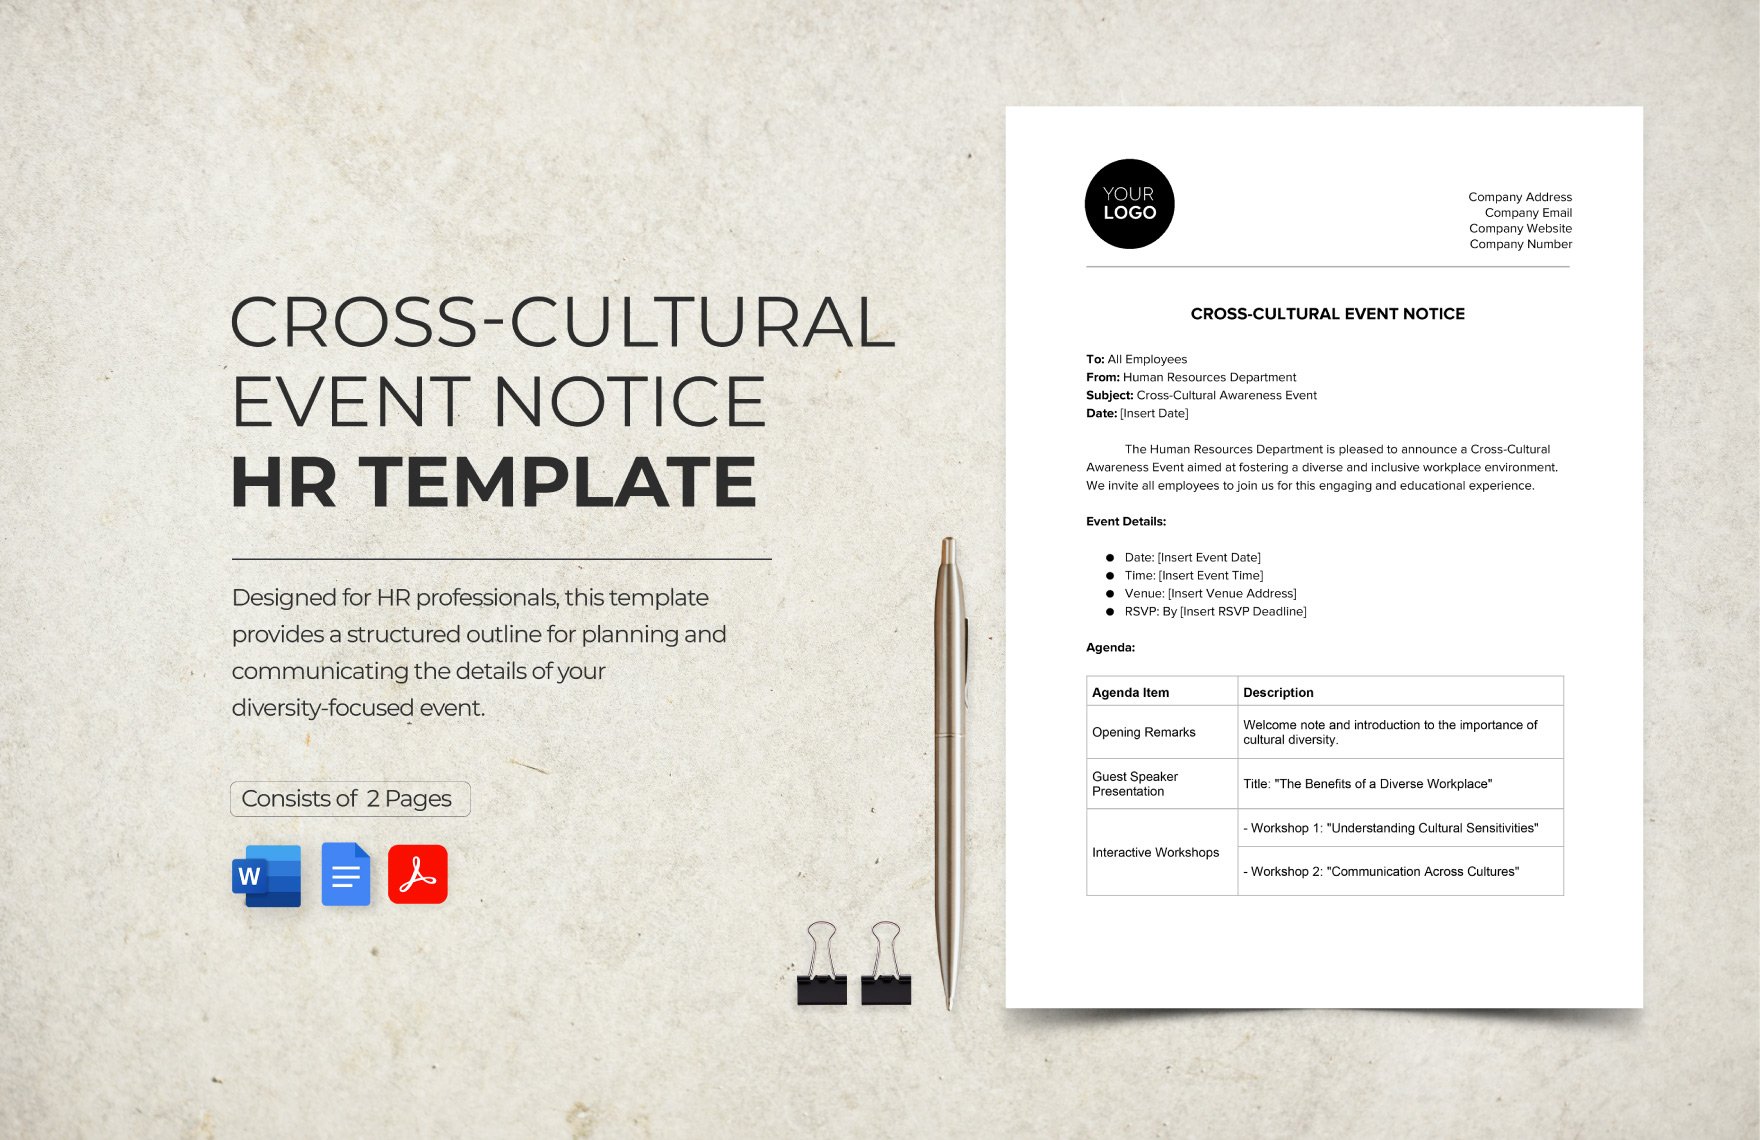 Cross-Cultural Event Notice HR Template